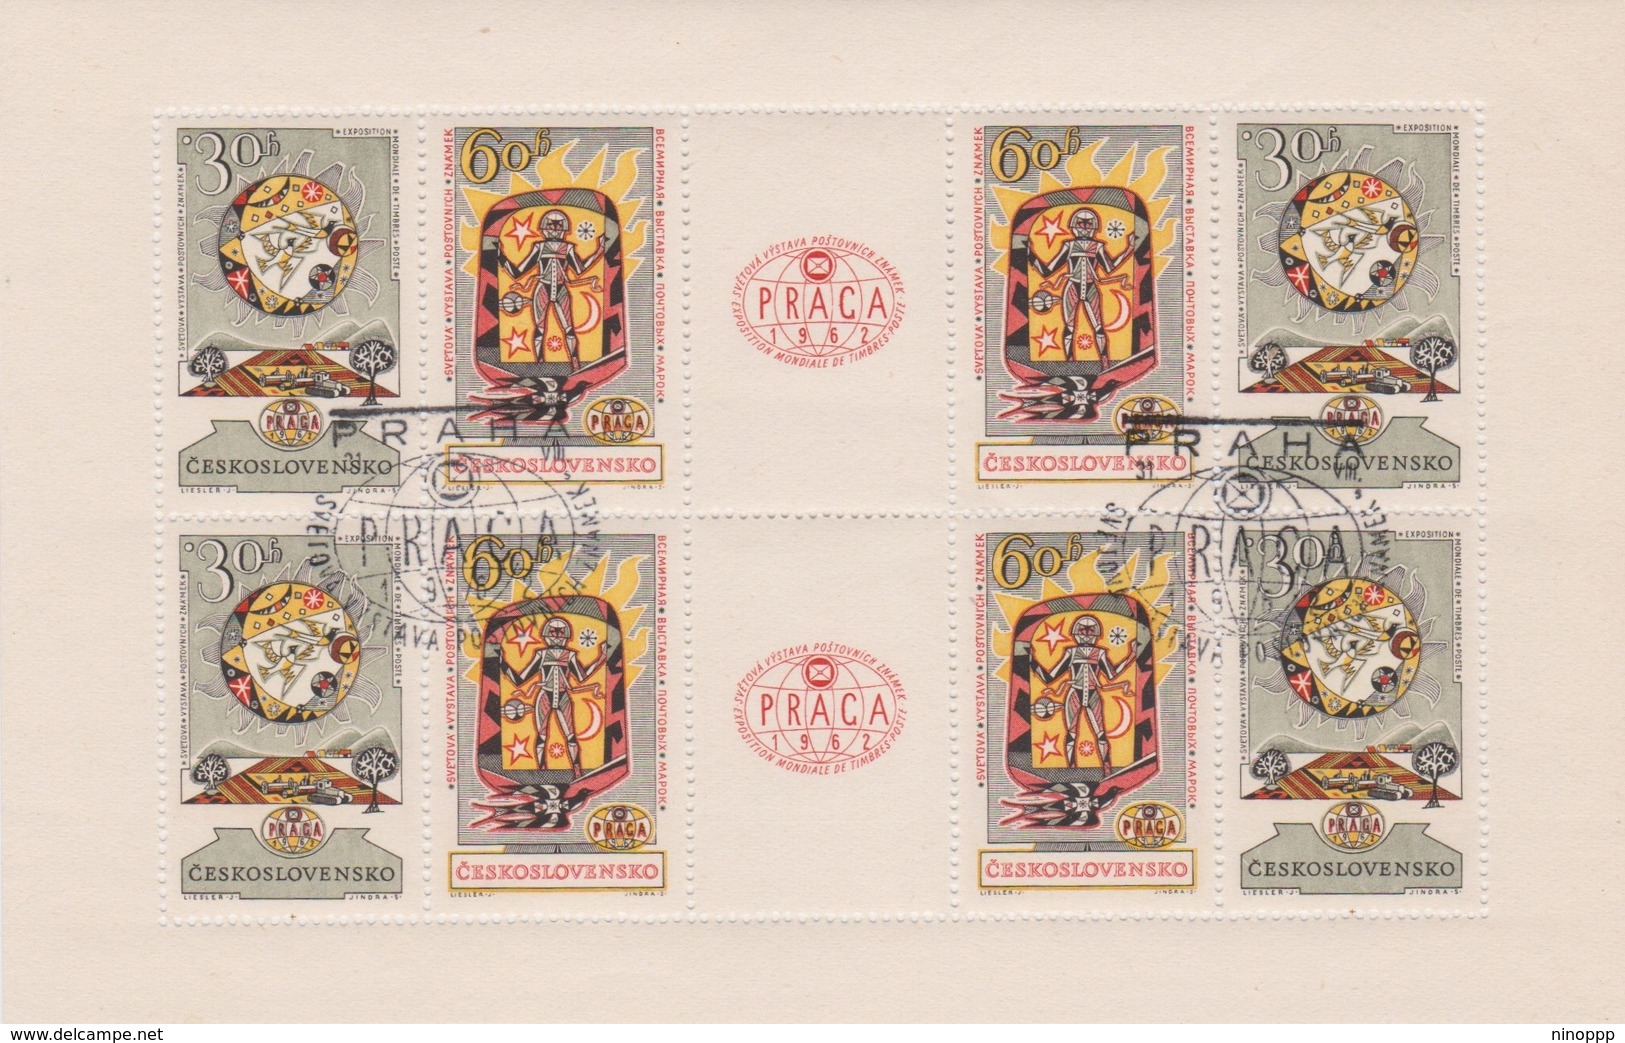 Czechoslovakia Scott 1129a 1962 Praga 62 World Stamp Expo, Souvenir Sheet, Used - Blocks & Sheetlets